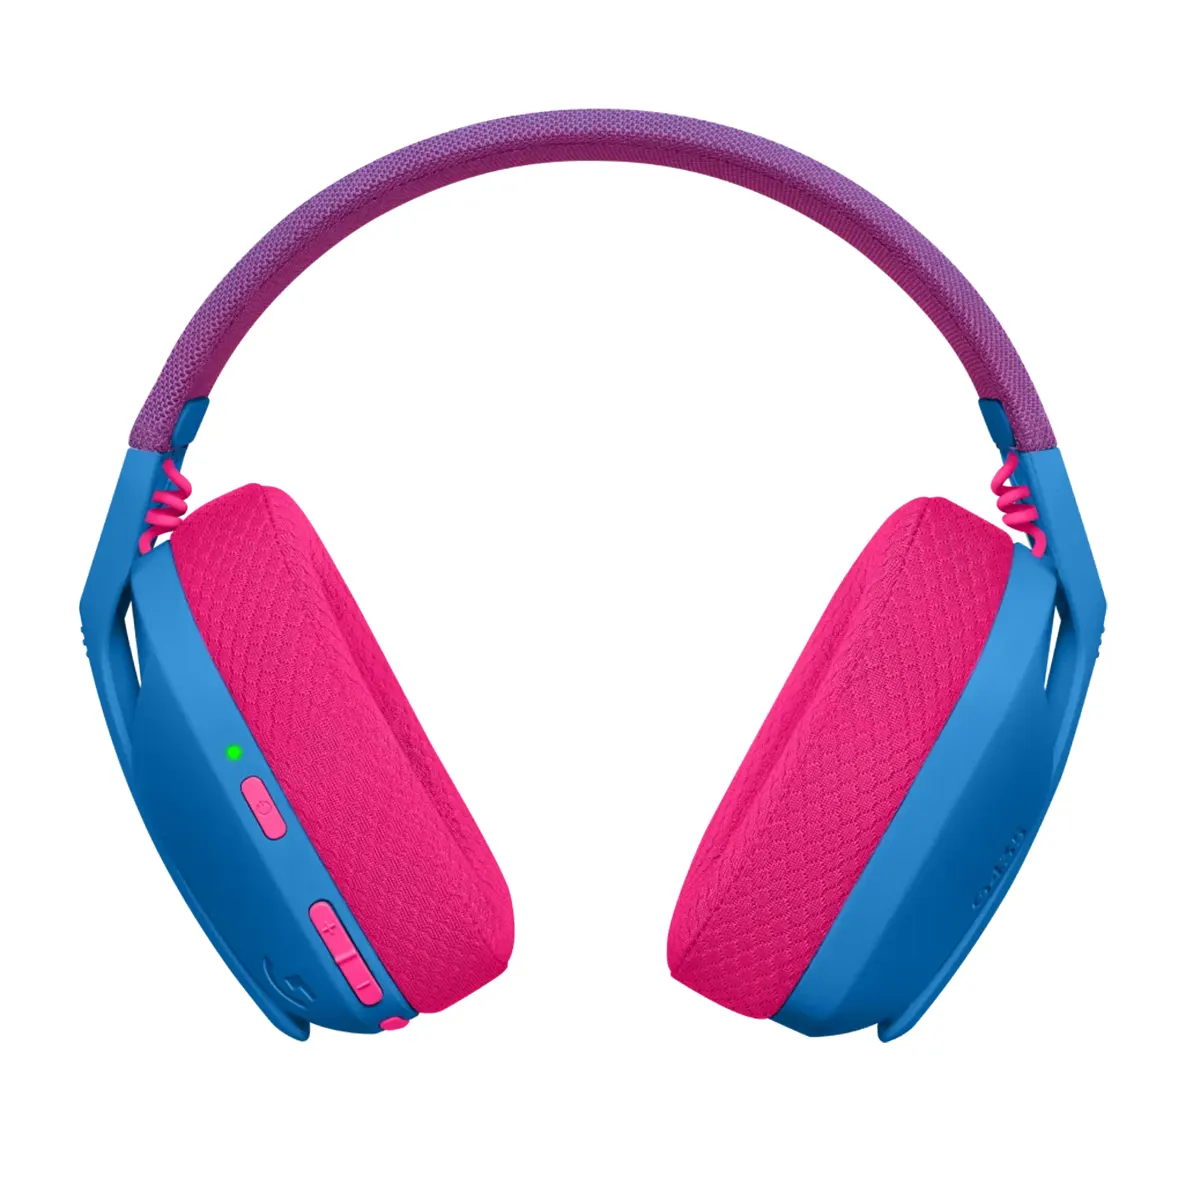 هدست گیمینگ بی سیم لاجیتک Logitech G435 Ultra-light Wireless Bluetooth Gaming Headset رنگ آبی (5)